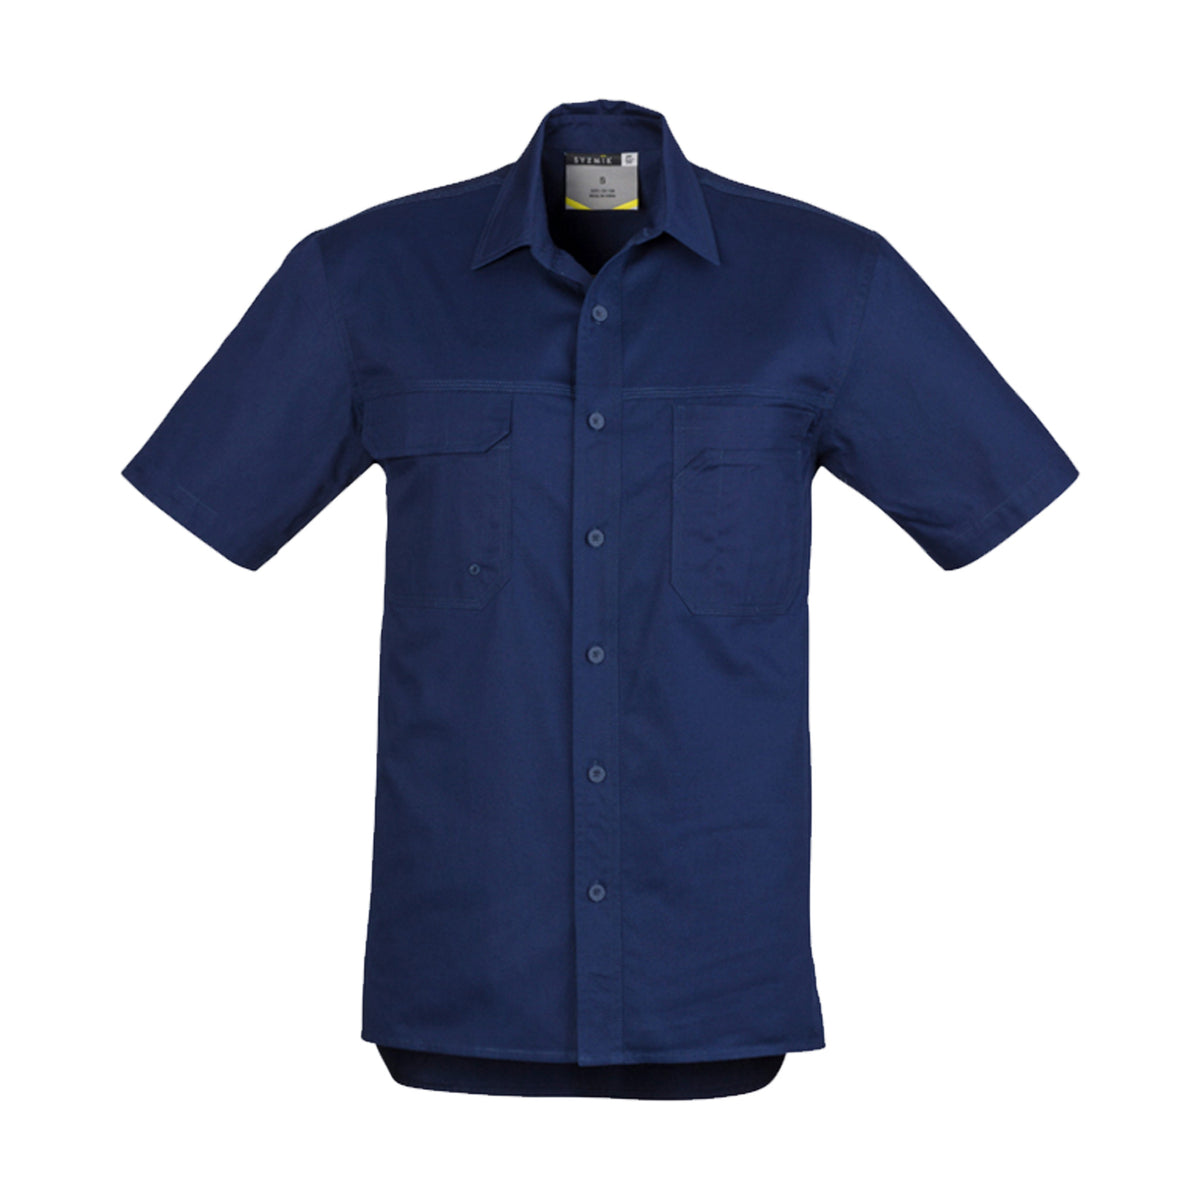 light weight short sleeve tradie shirt in blue